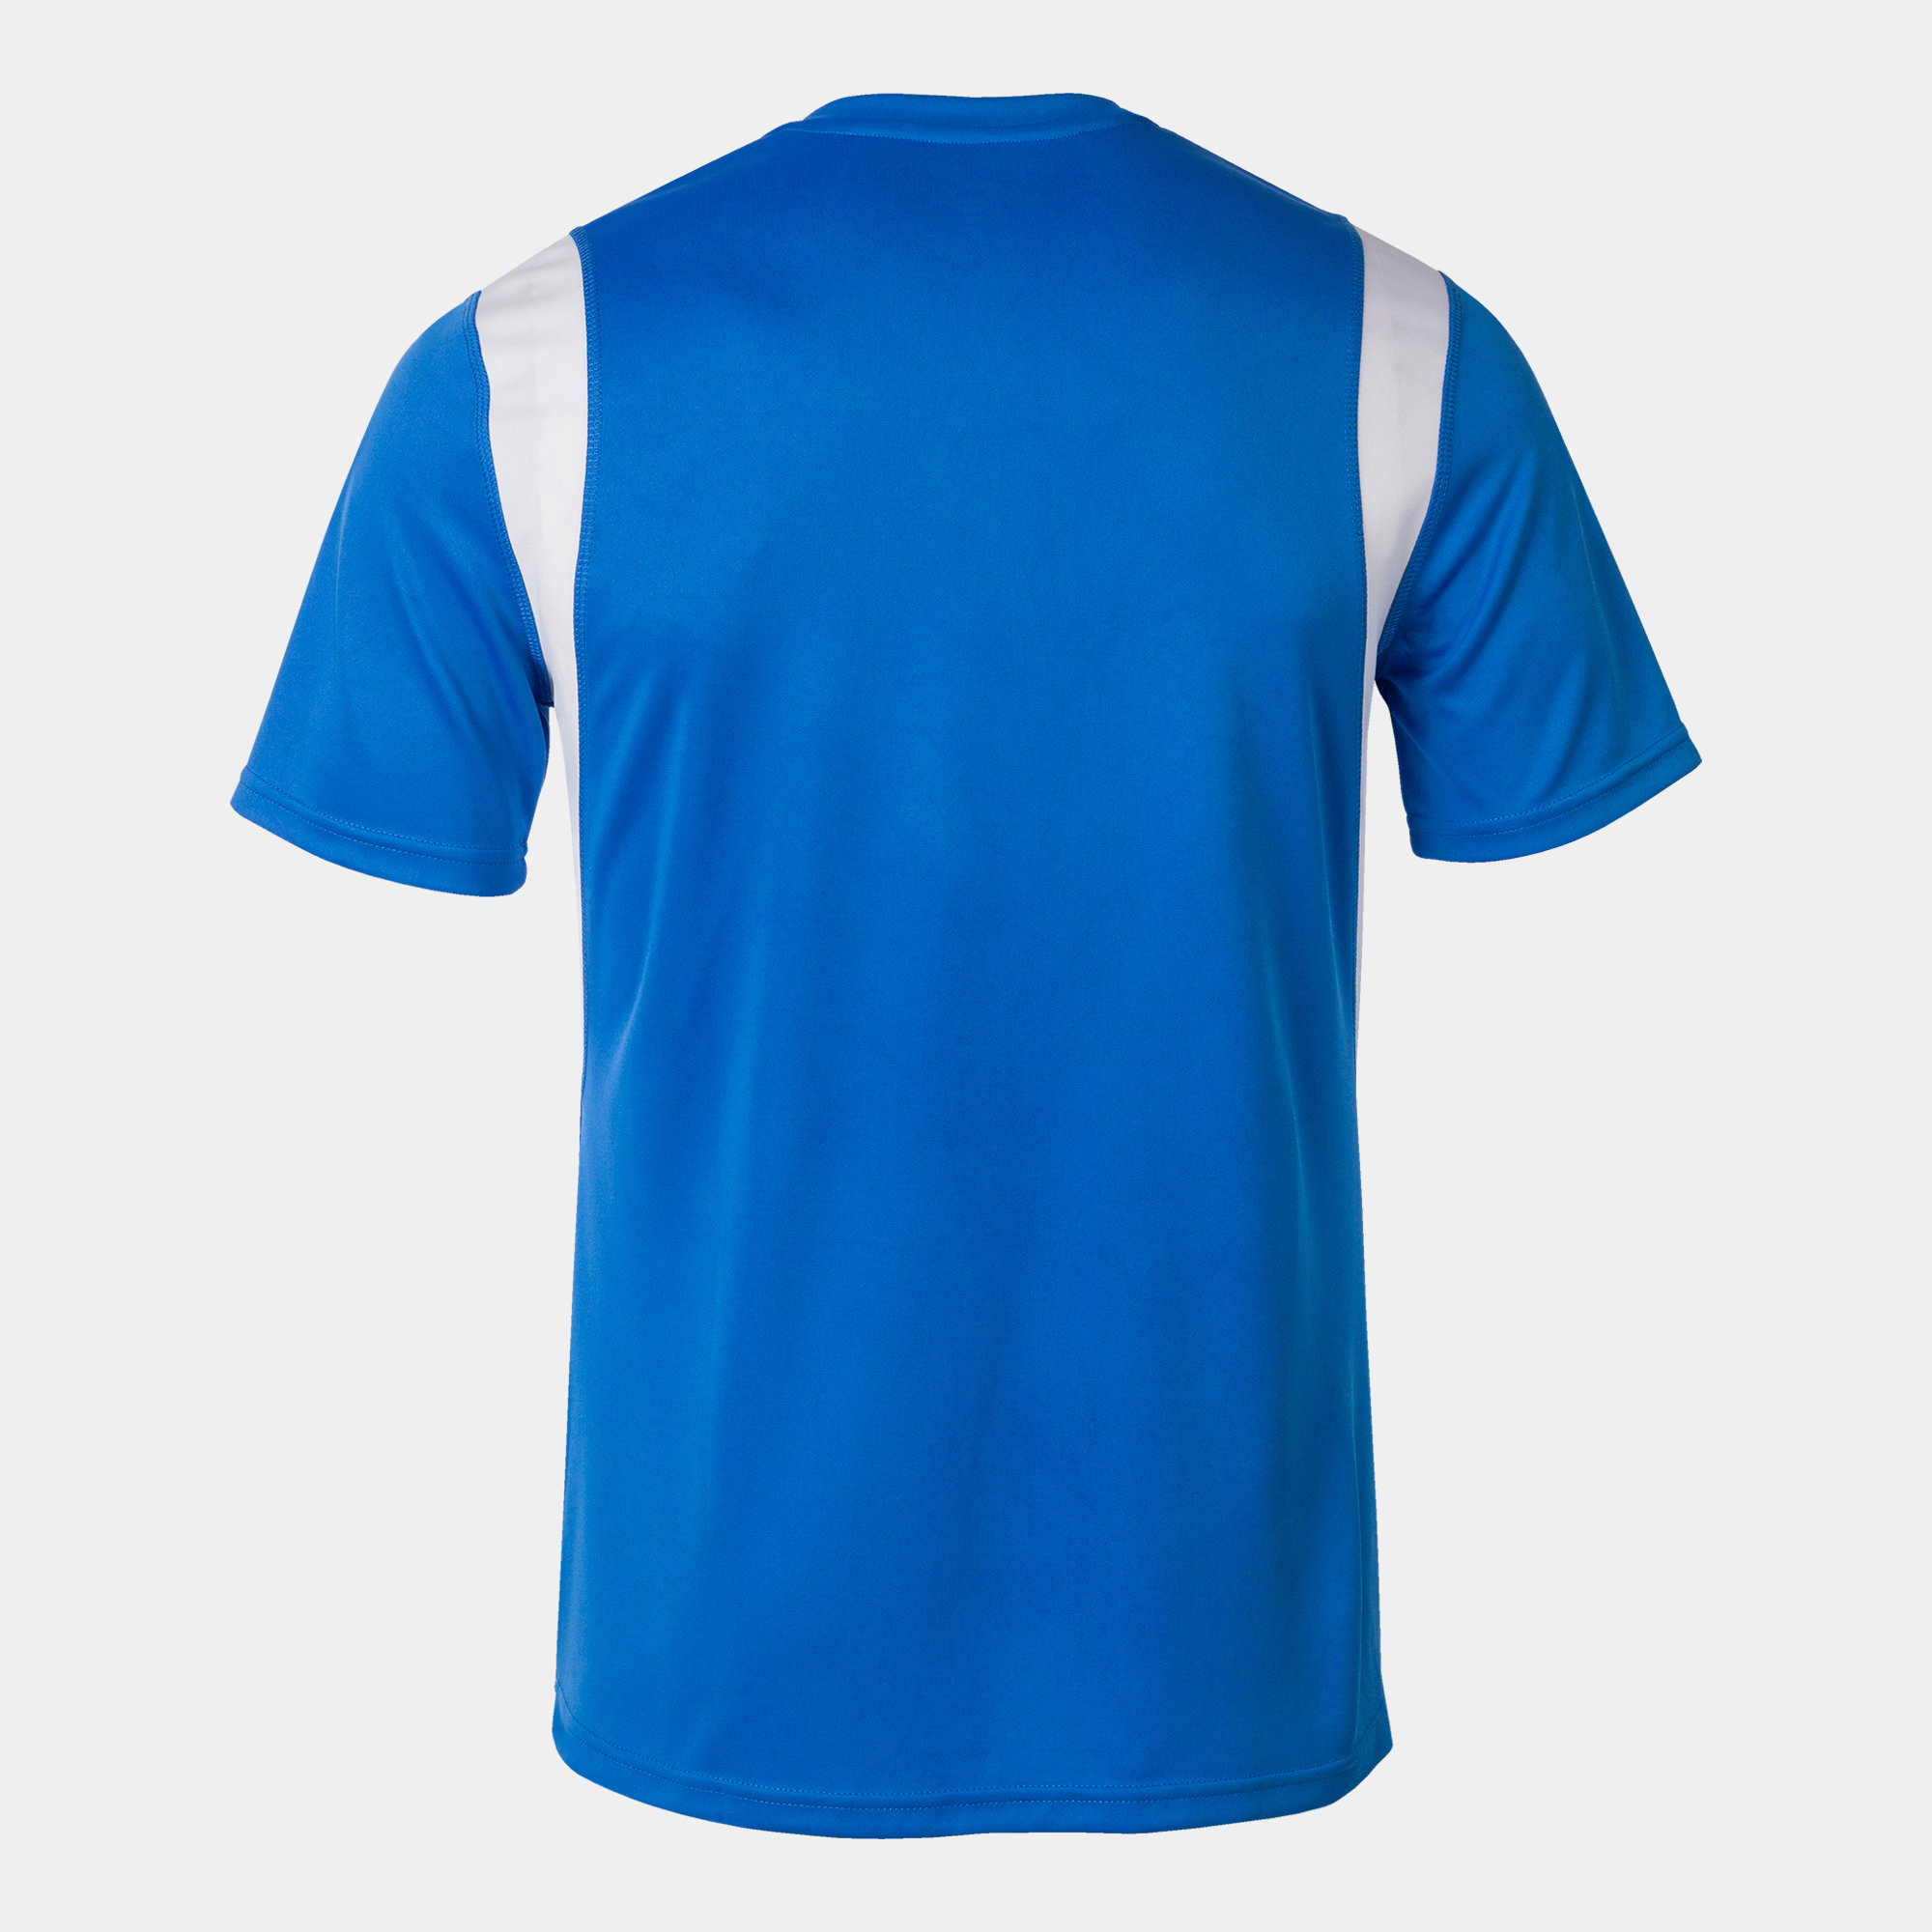 T-shirt Manga Curta Joma Dinamo Azul Royal